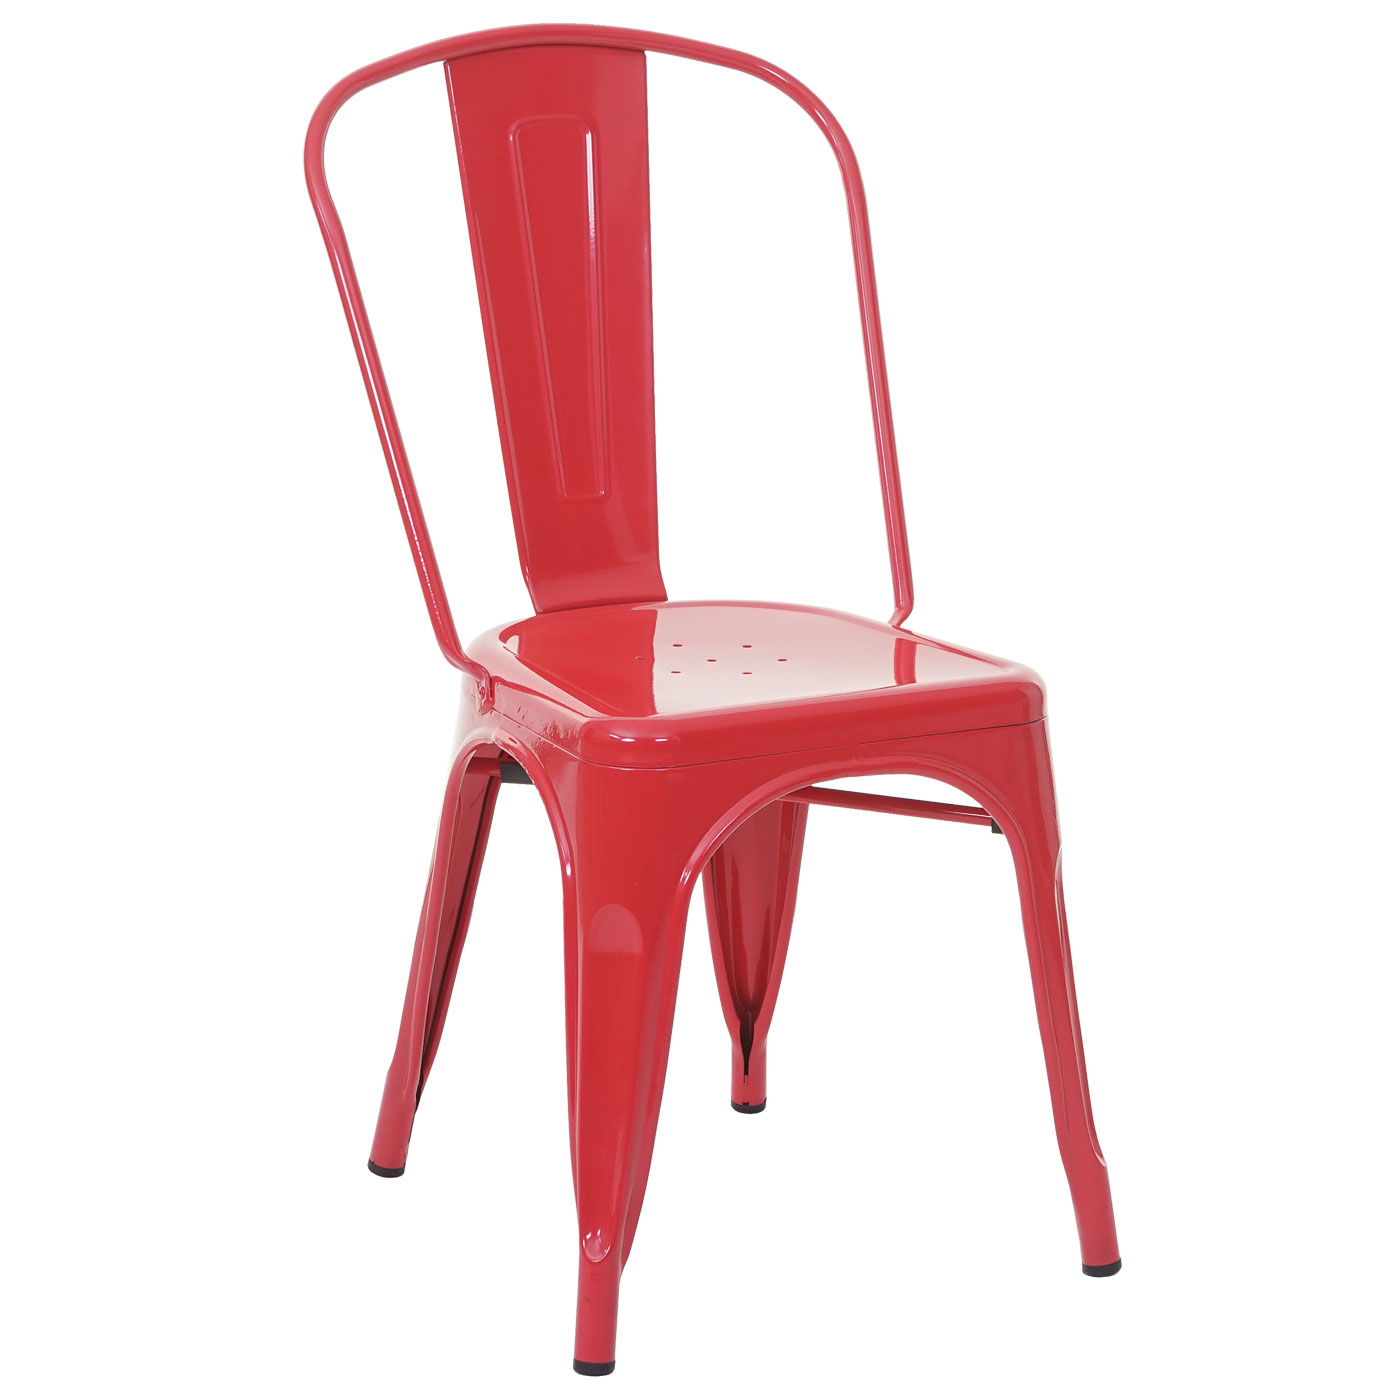 Metall Stuhl rot stapelbar Bistrostuhl Stapelstuhl, ~ von HWC-A73, Heute-Wohnen Industriedesign